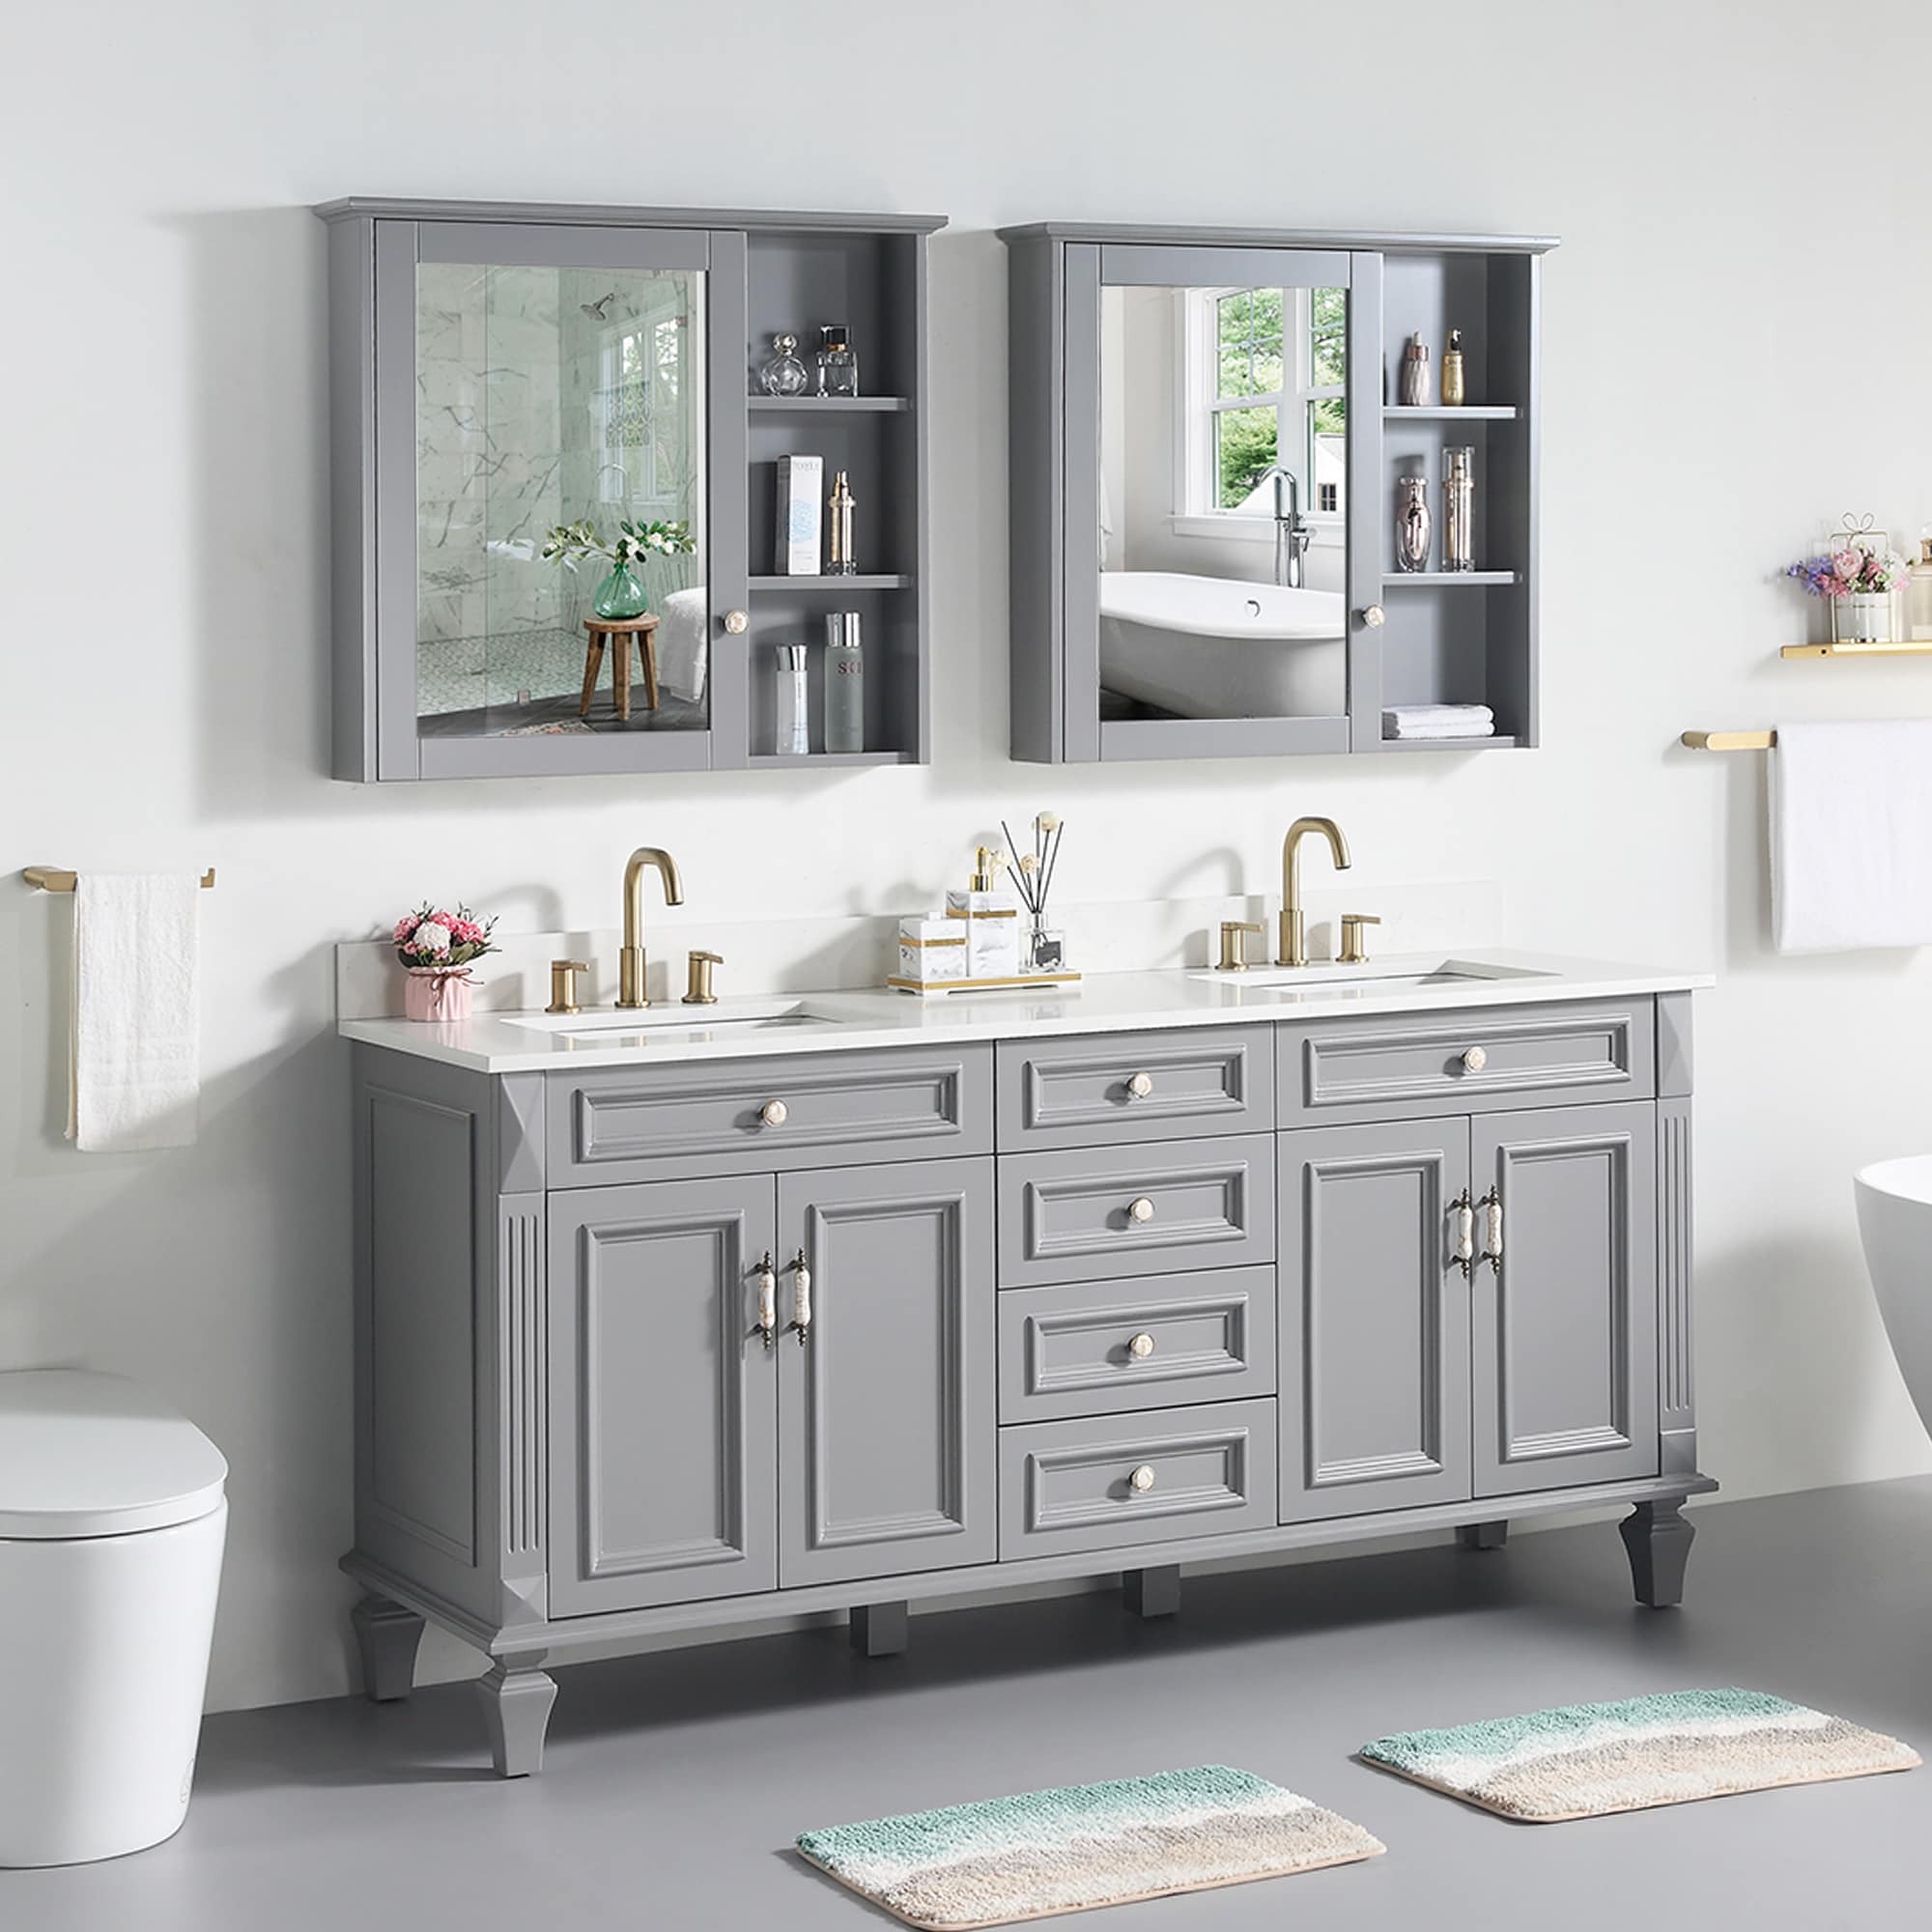 30 Bathroom Vanity with Single Sink Combo Cabinet Undermount Sink,Bathroom Storage Cabinet,Solid Wood Frame - Grey